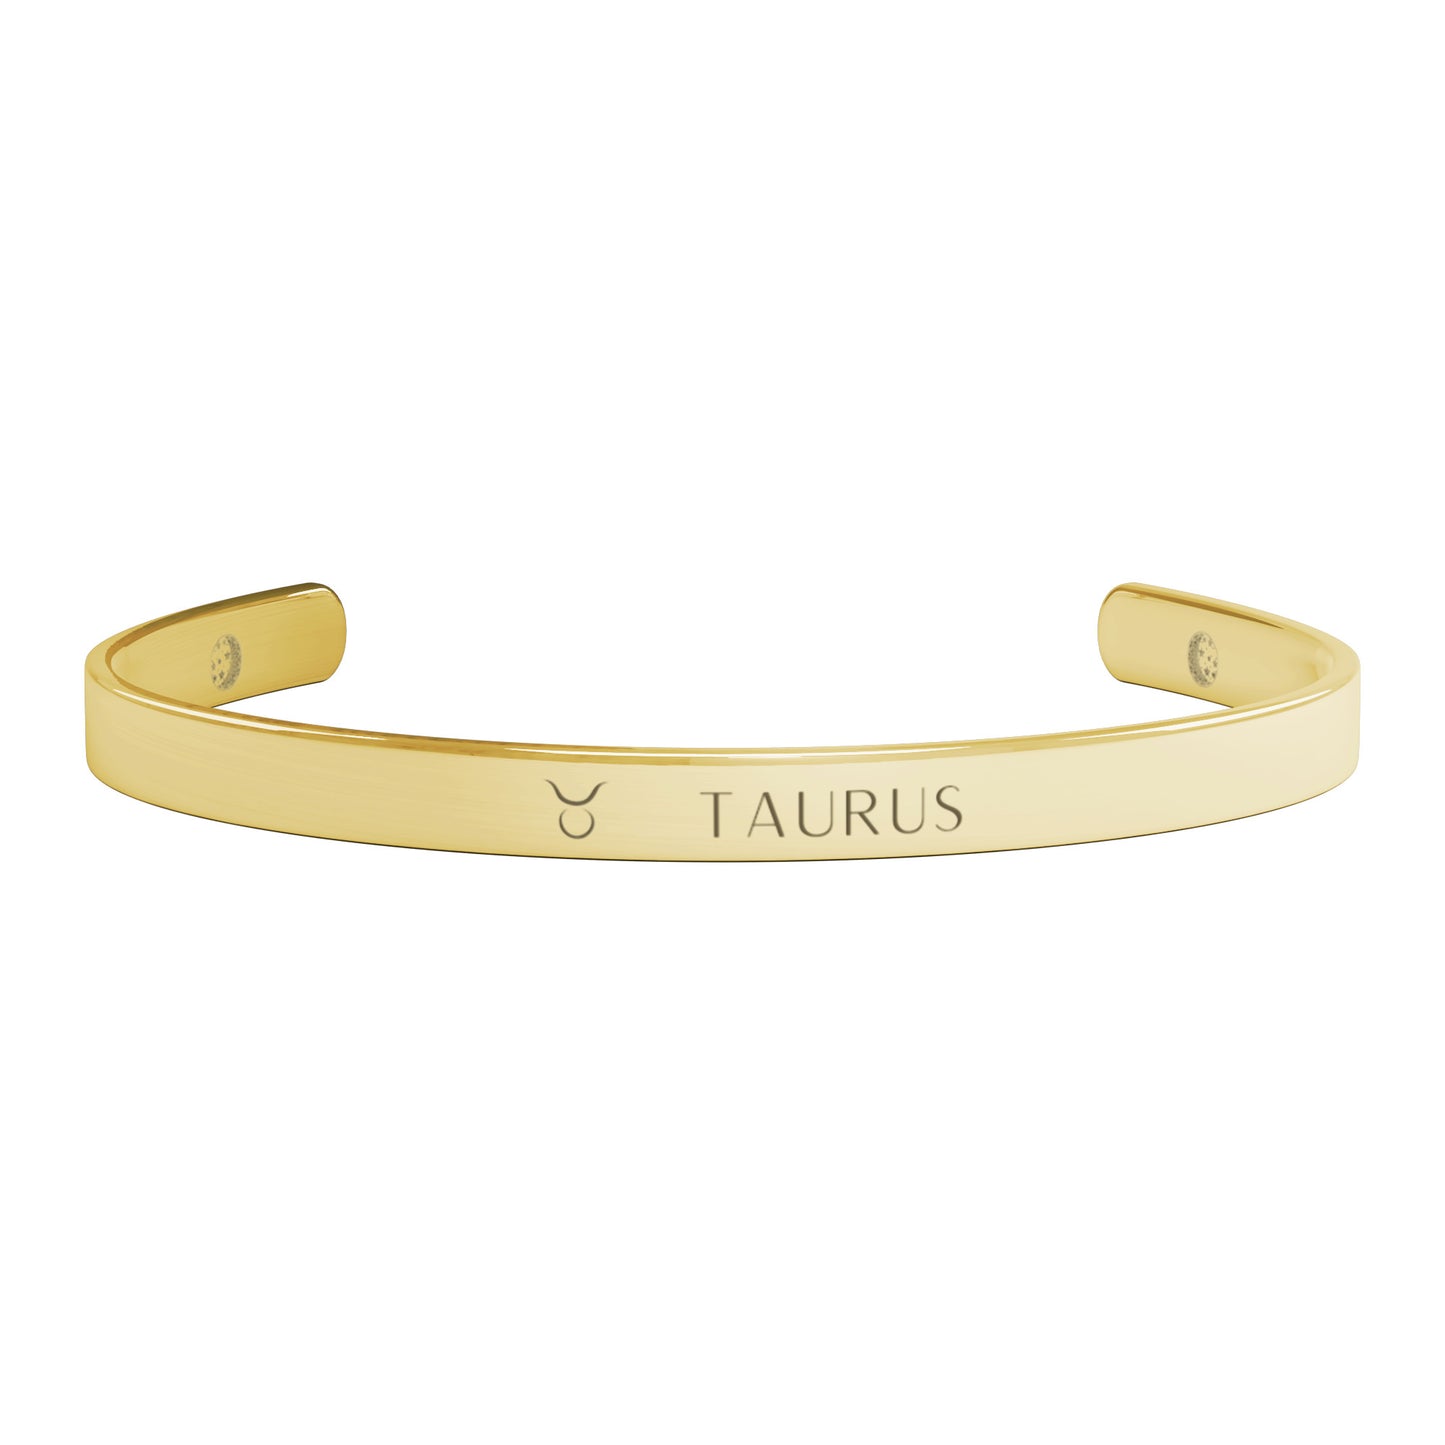 Taurus bracelet